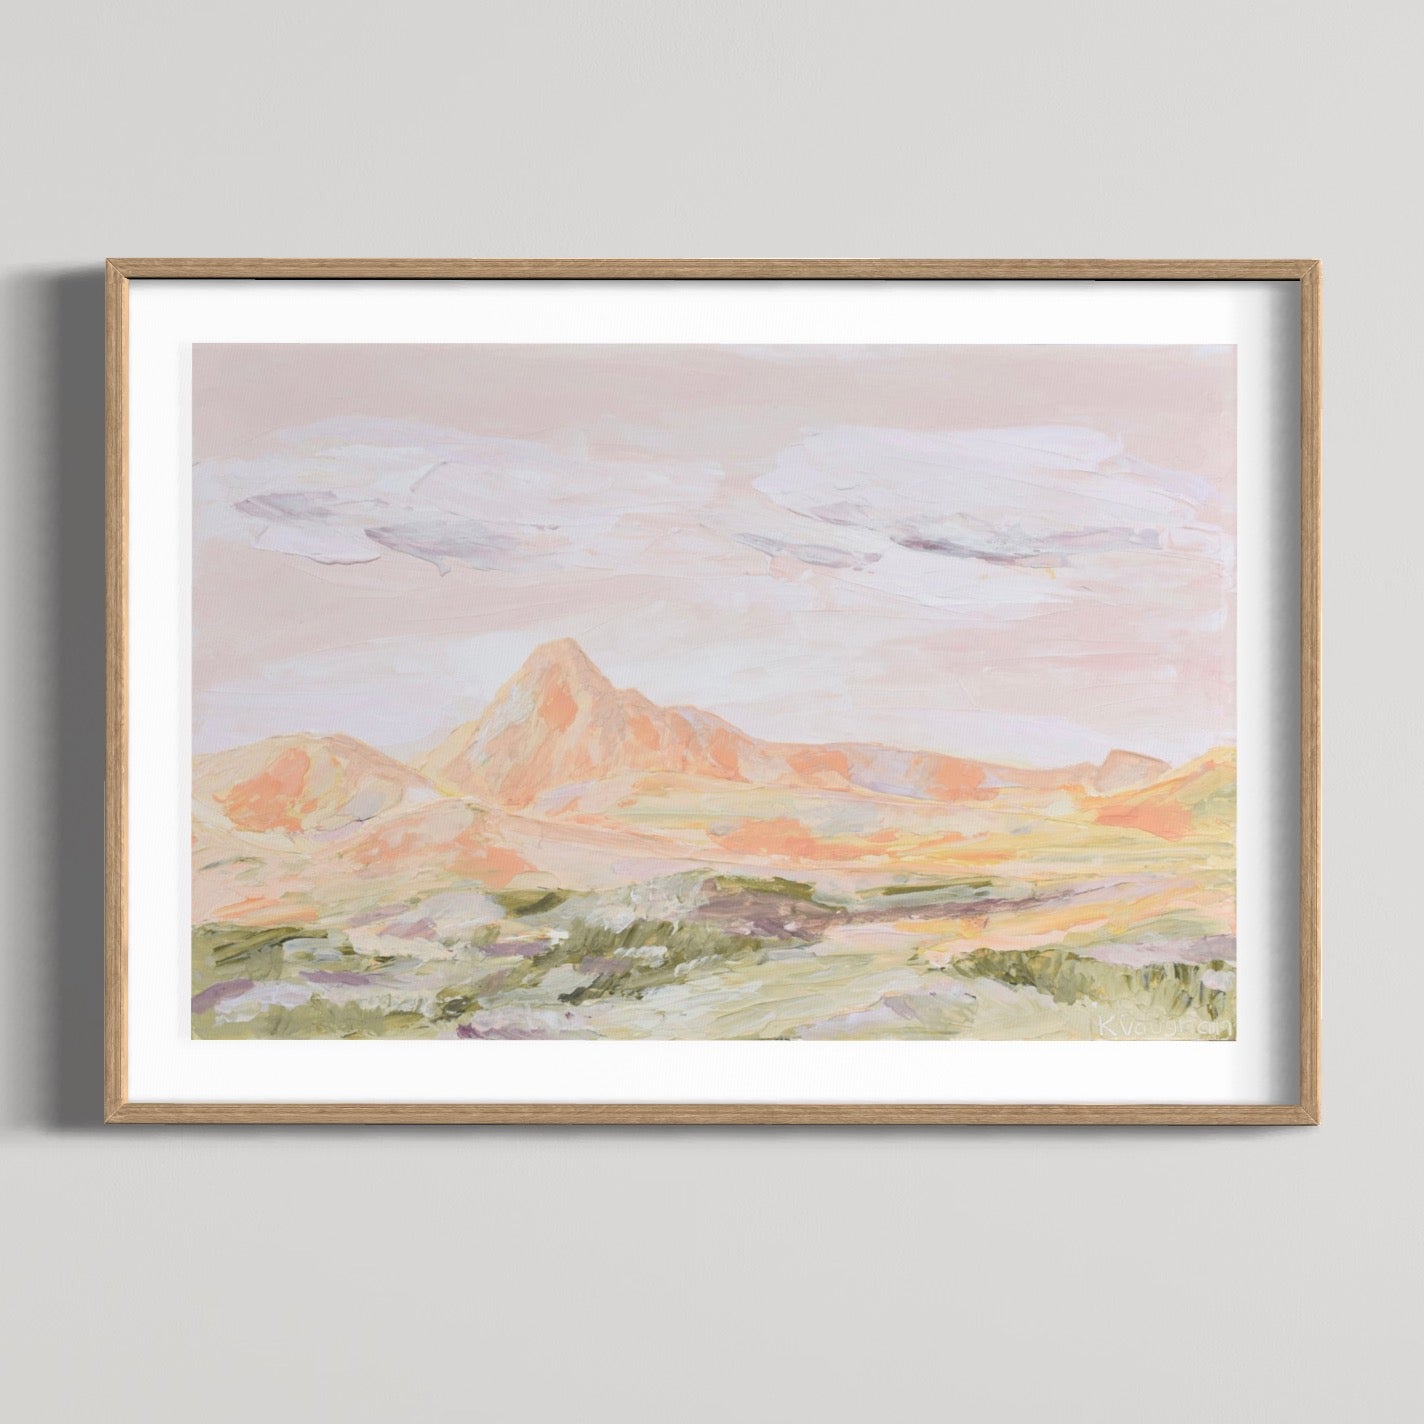 Pink Dusk, Mount Wollumbin - Unframed Print